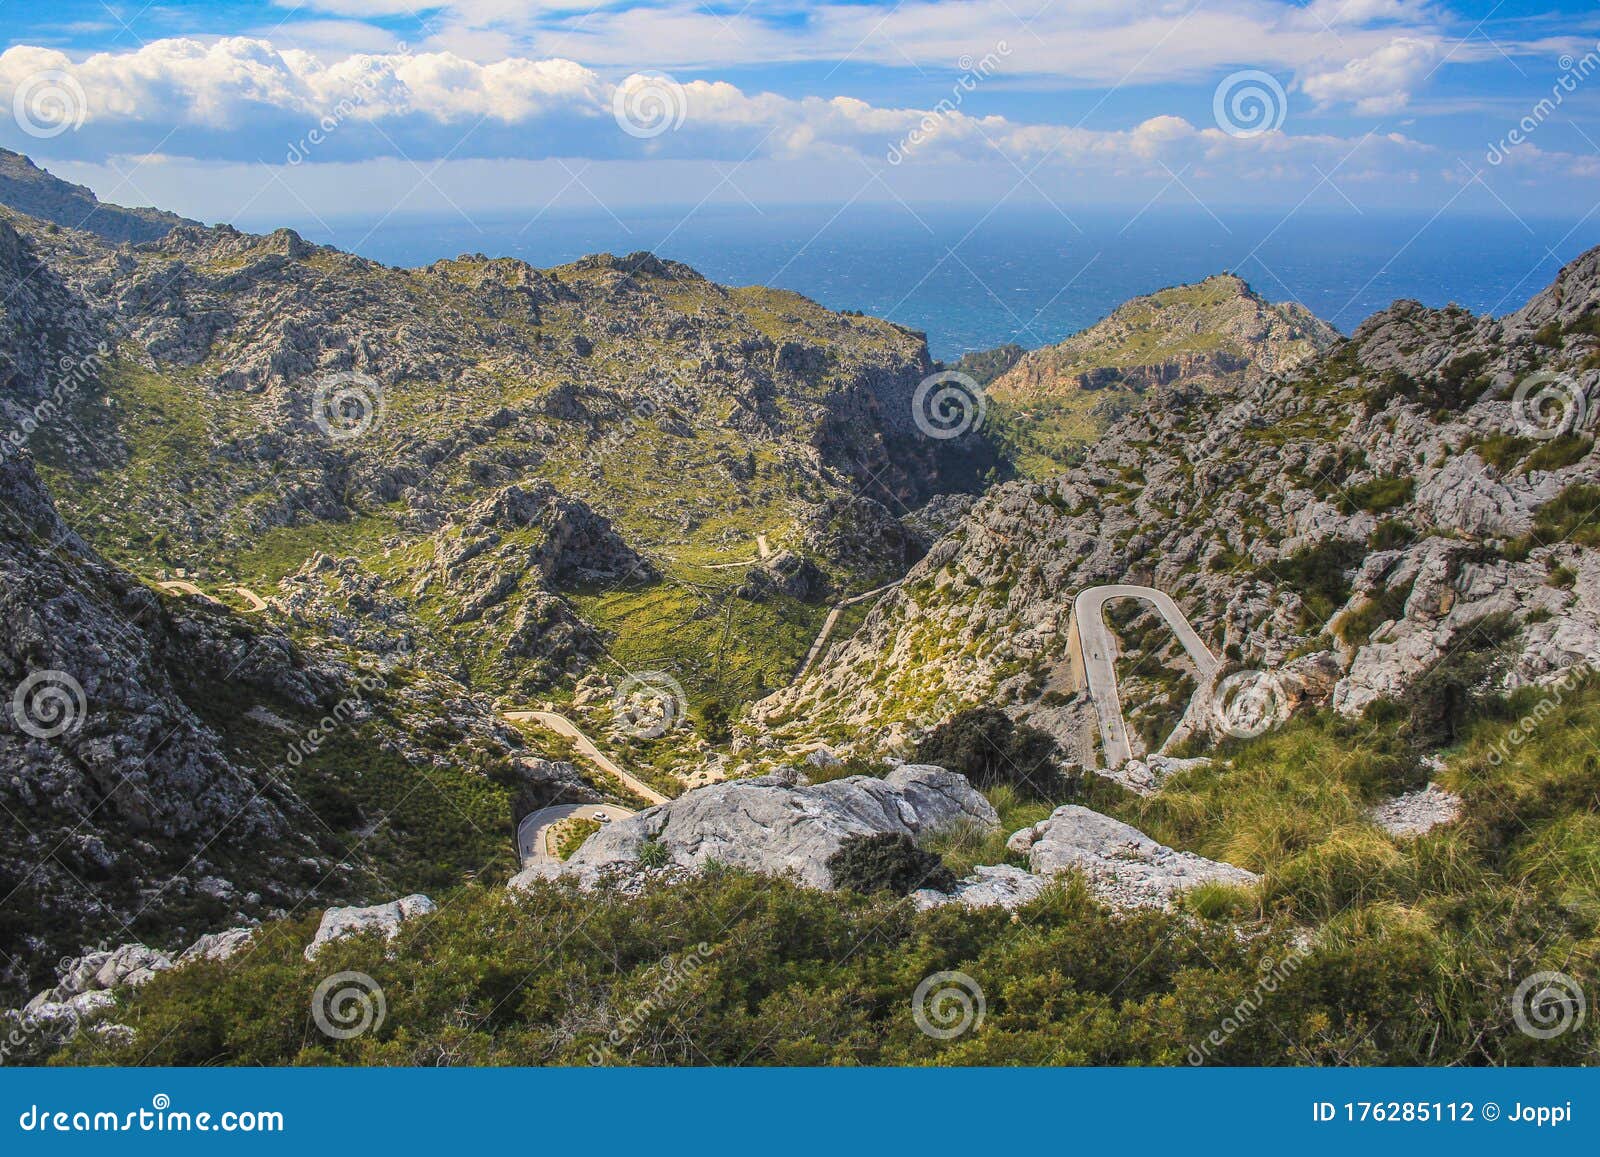 winding road through serra de tramuntana, view from nus de sa corbata viewpoint in mallorca, spain